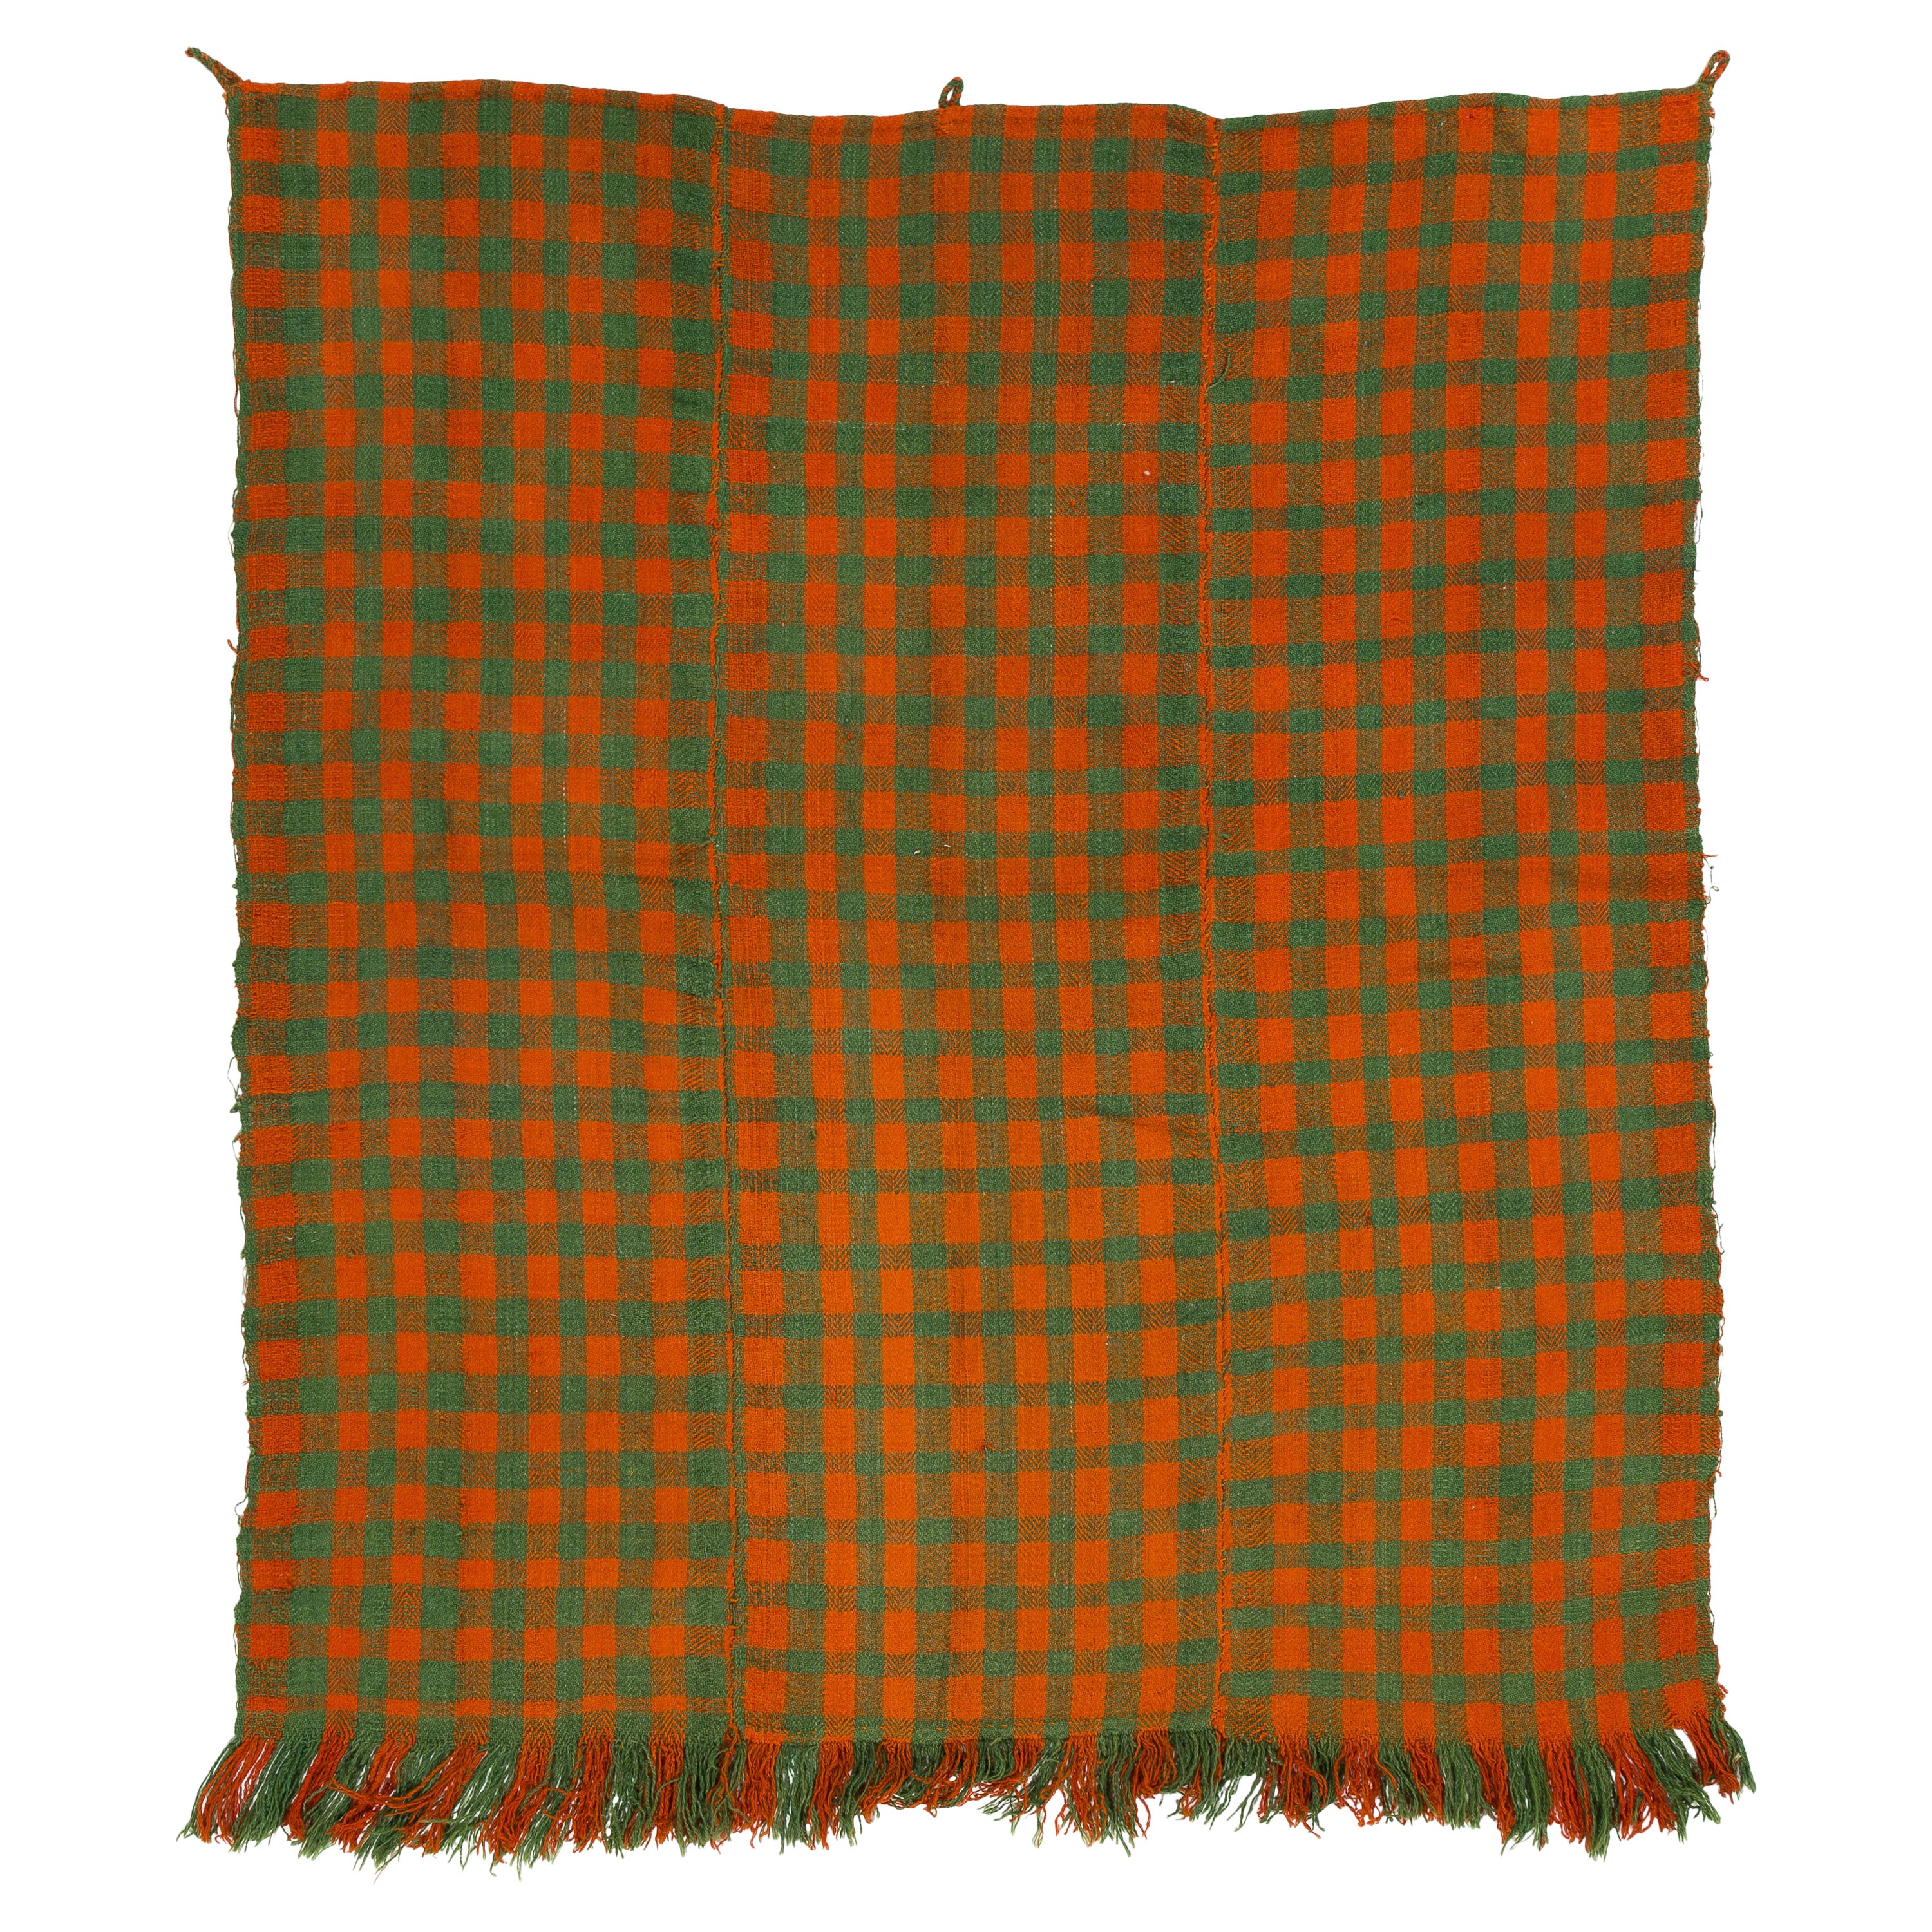 4.4x5 Ft Vintage Checkered Turkish Flat-weave Kilim Rug in Orange & Citrus Green For Sale